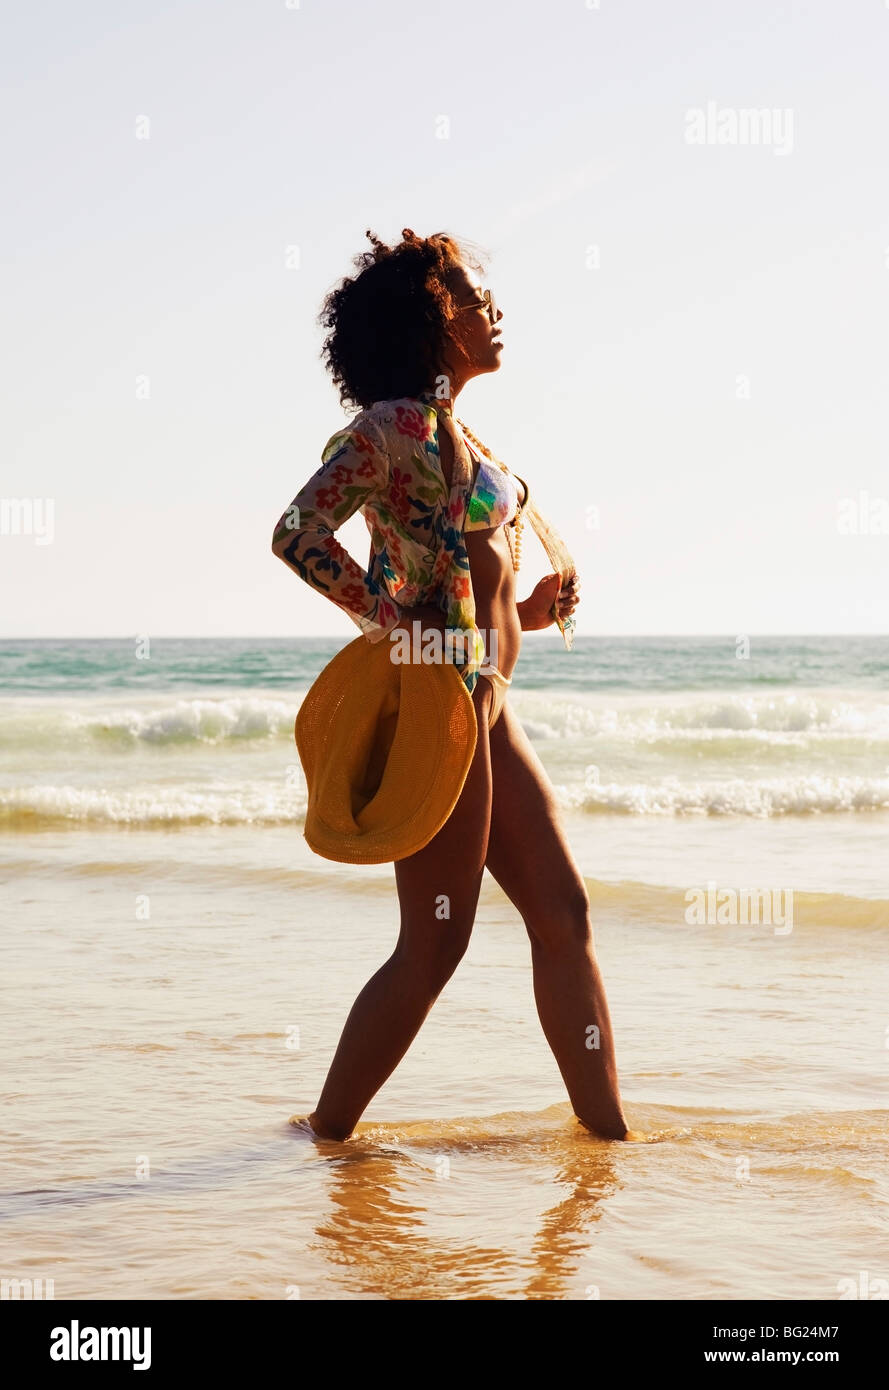 Woman on the beach Stock Photo